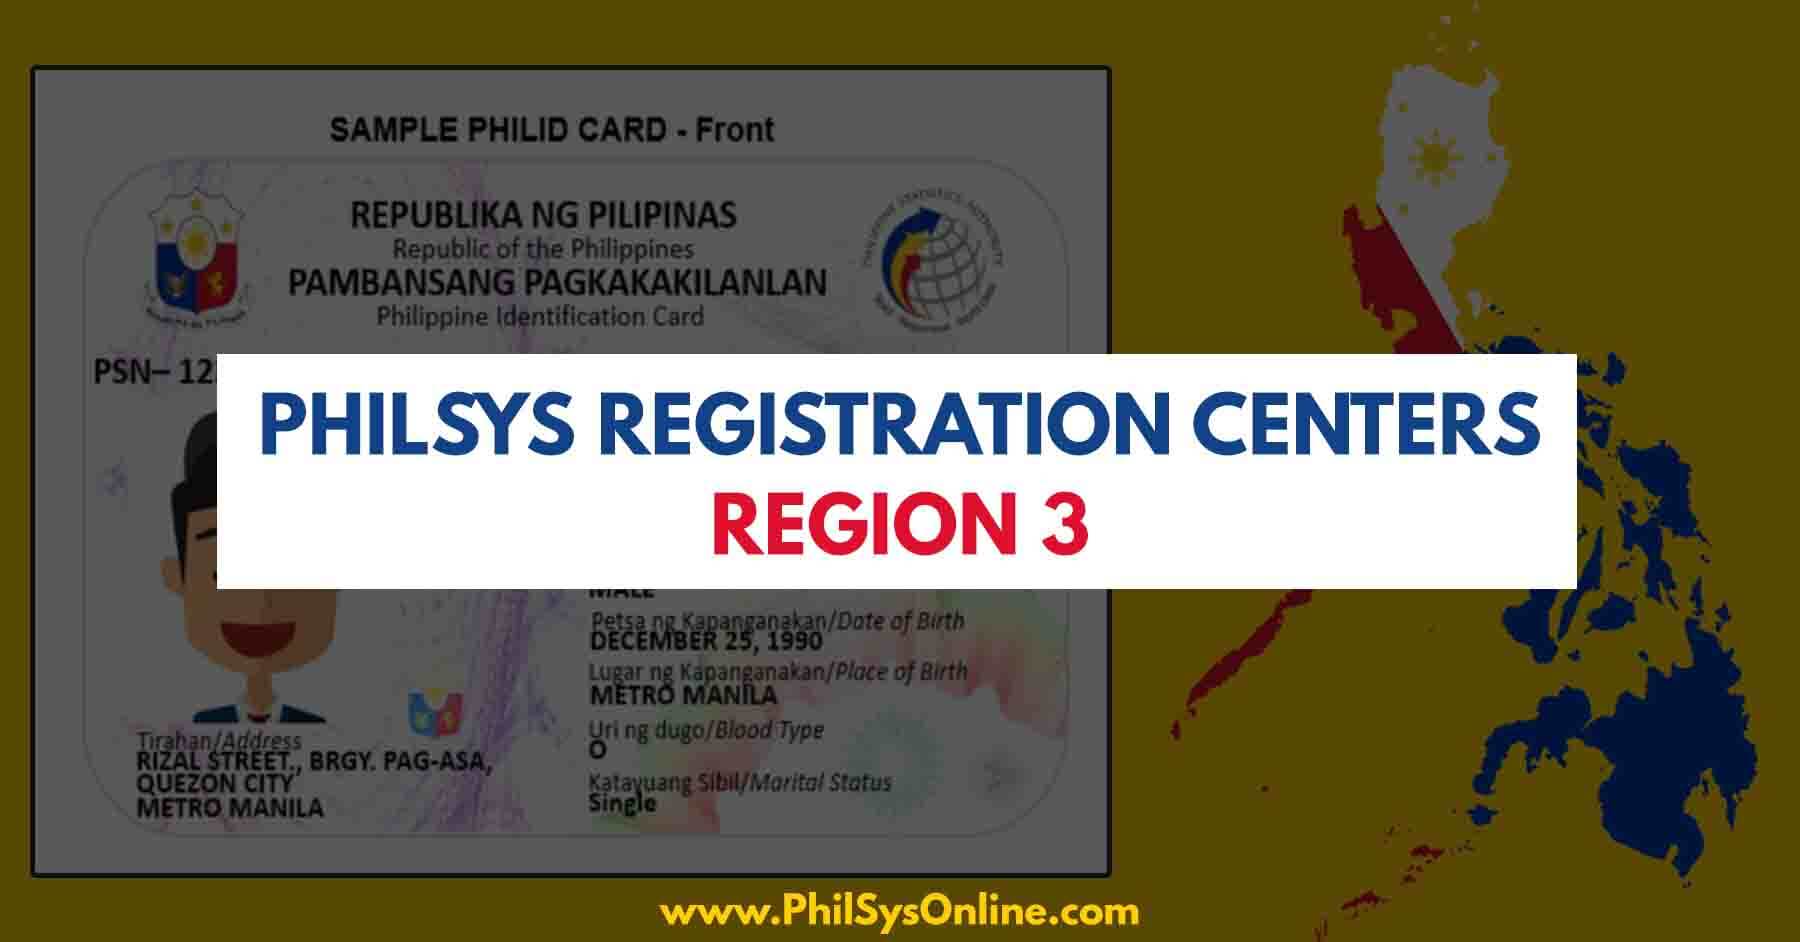 philsys registration centers region 3 philippines